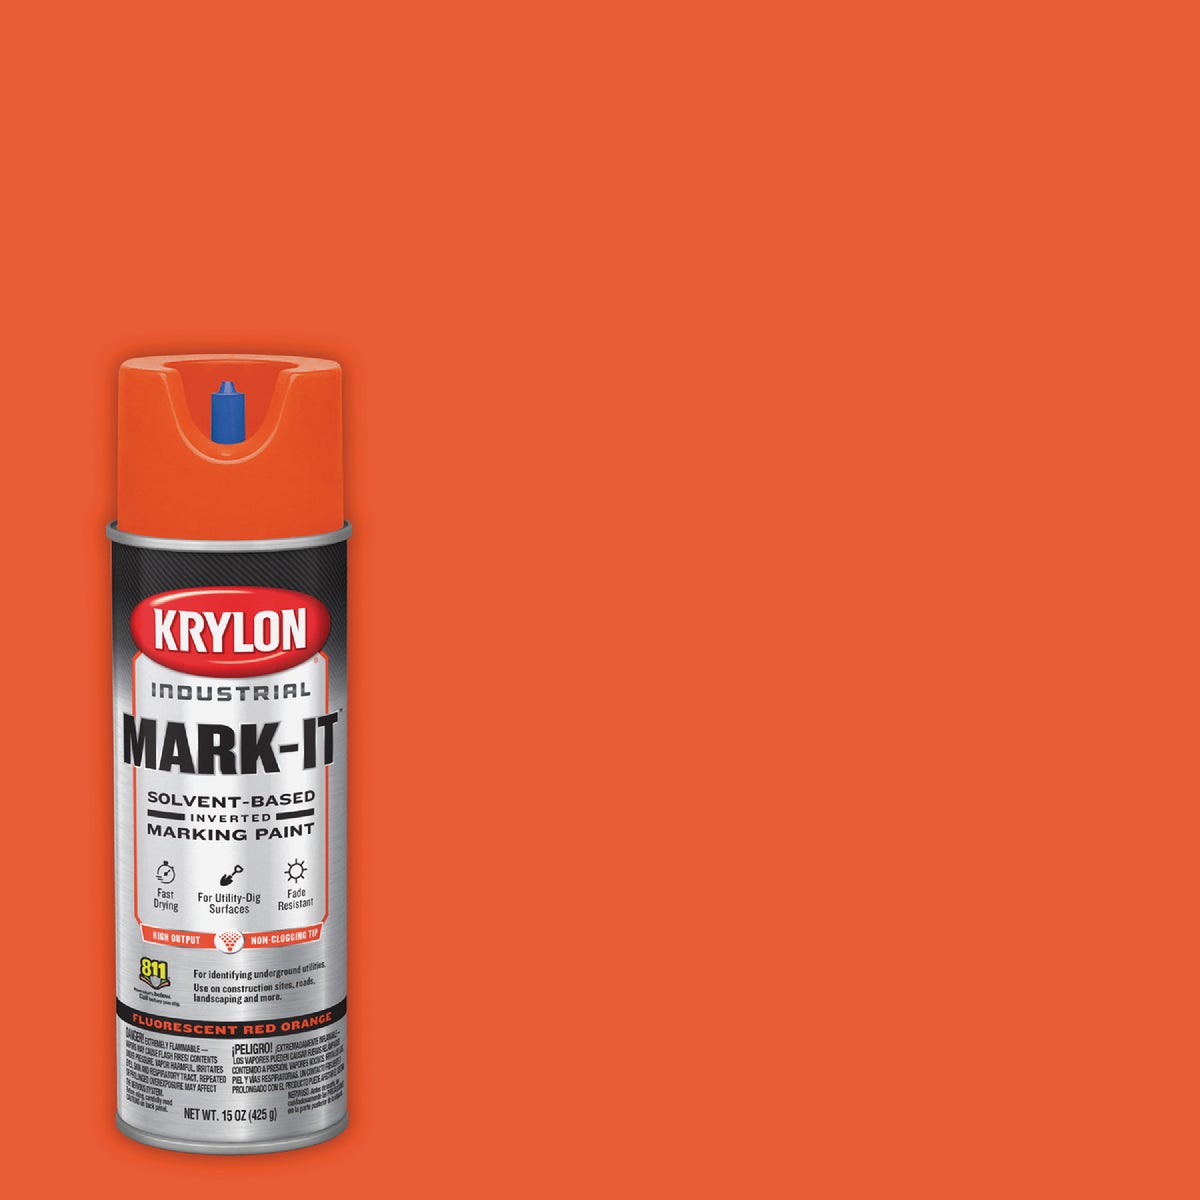 Krylon Mark-It 731008 Industrial SB Fluorescent Red Orange Inverted Marking Paint